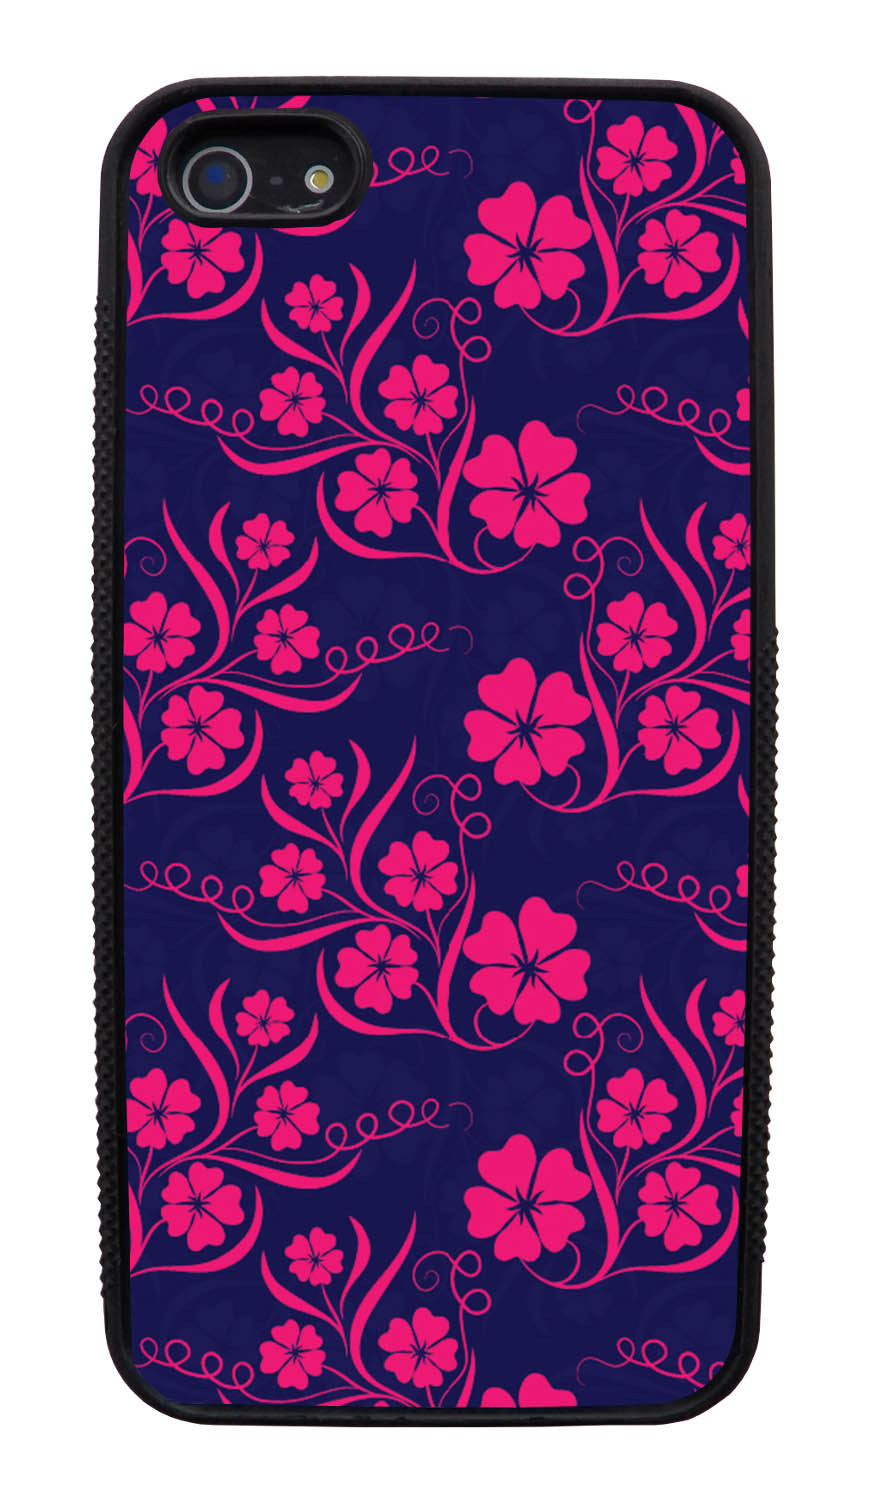 Apple iPhone 5 / 5S Flower Case - Hot Pink on Navy Blue - Stencil Cutout - Black Slim Rubber Case